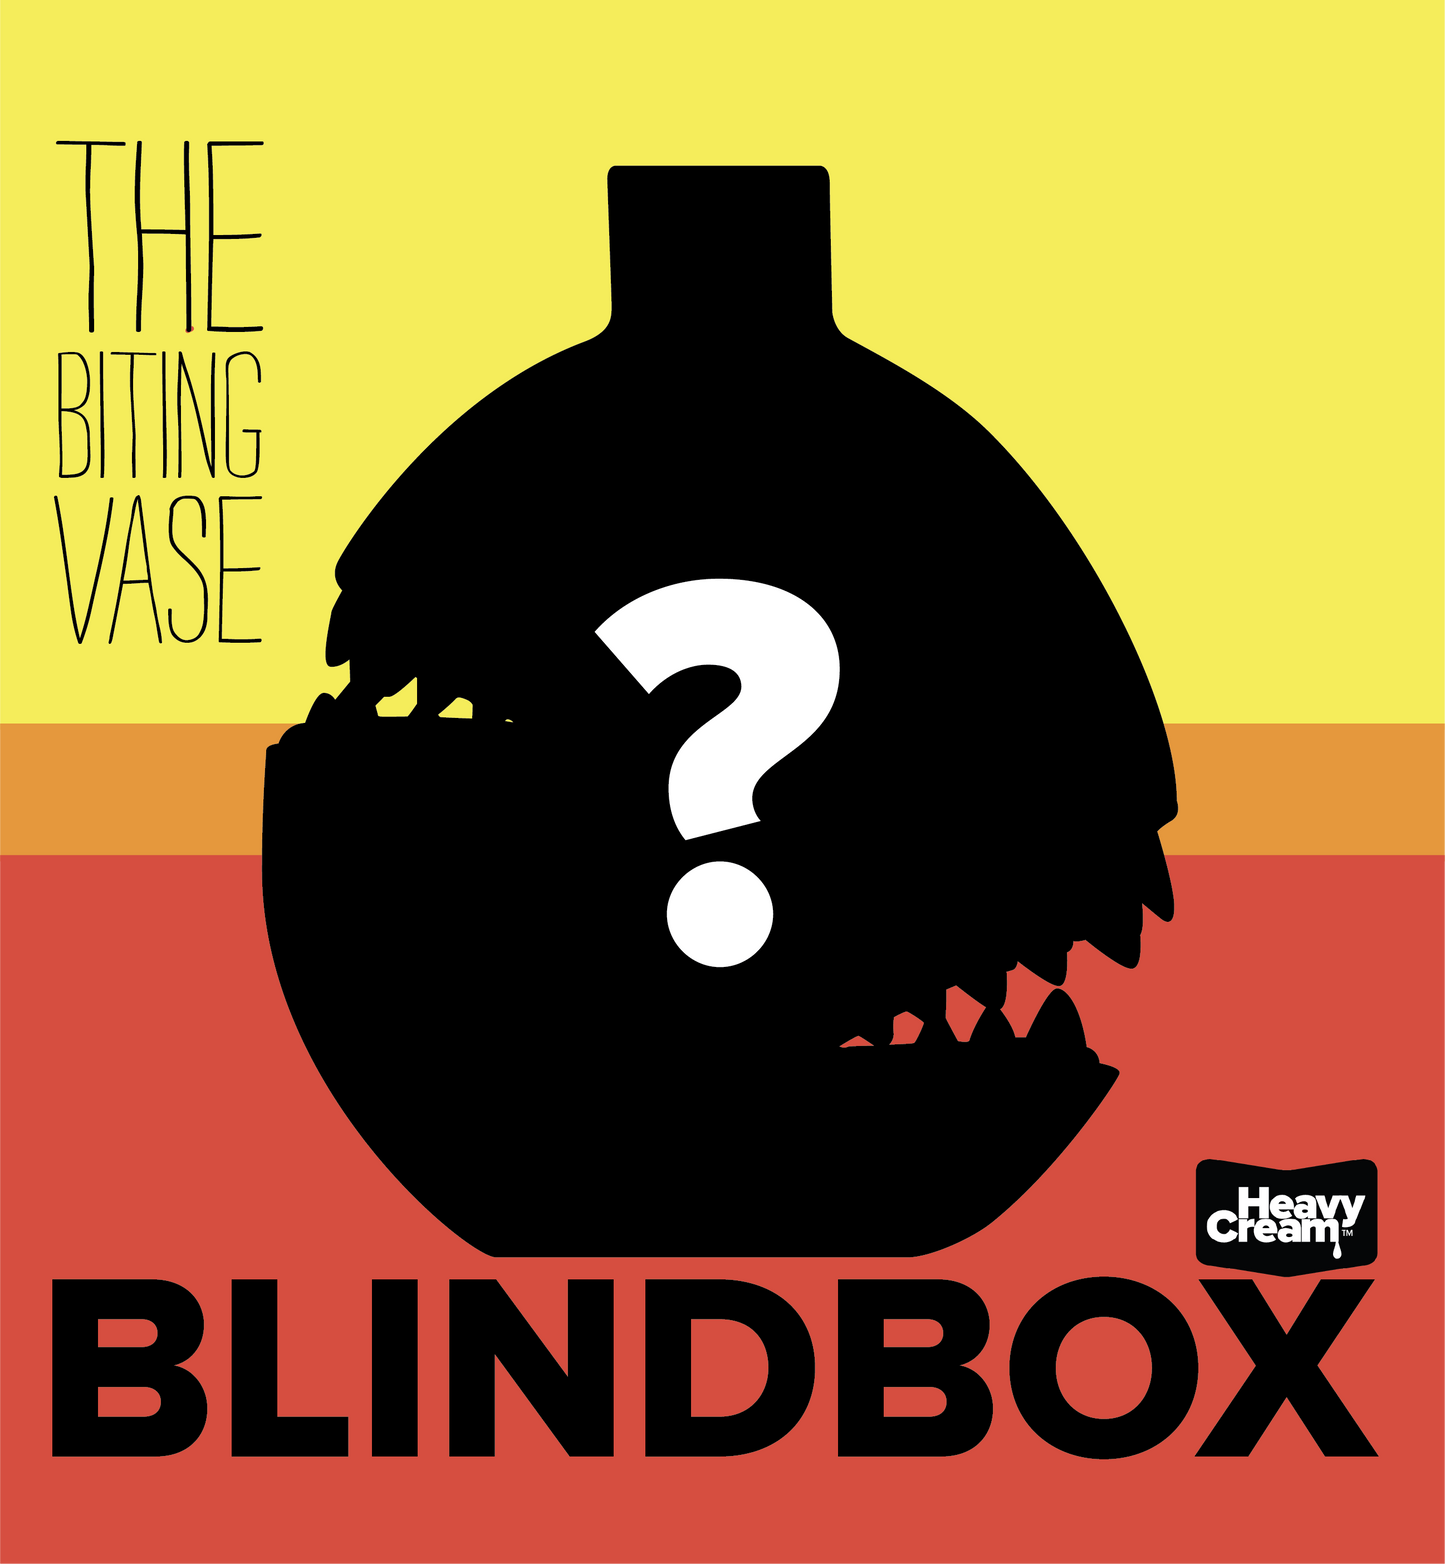 Biting Vase - Blind Box!!